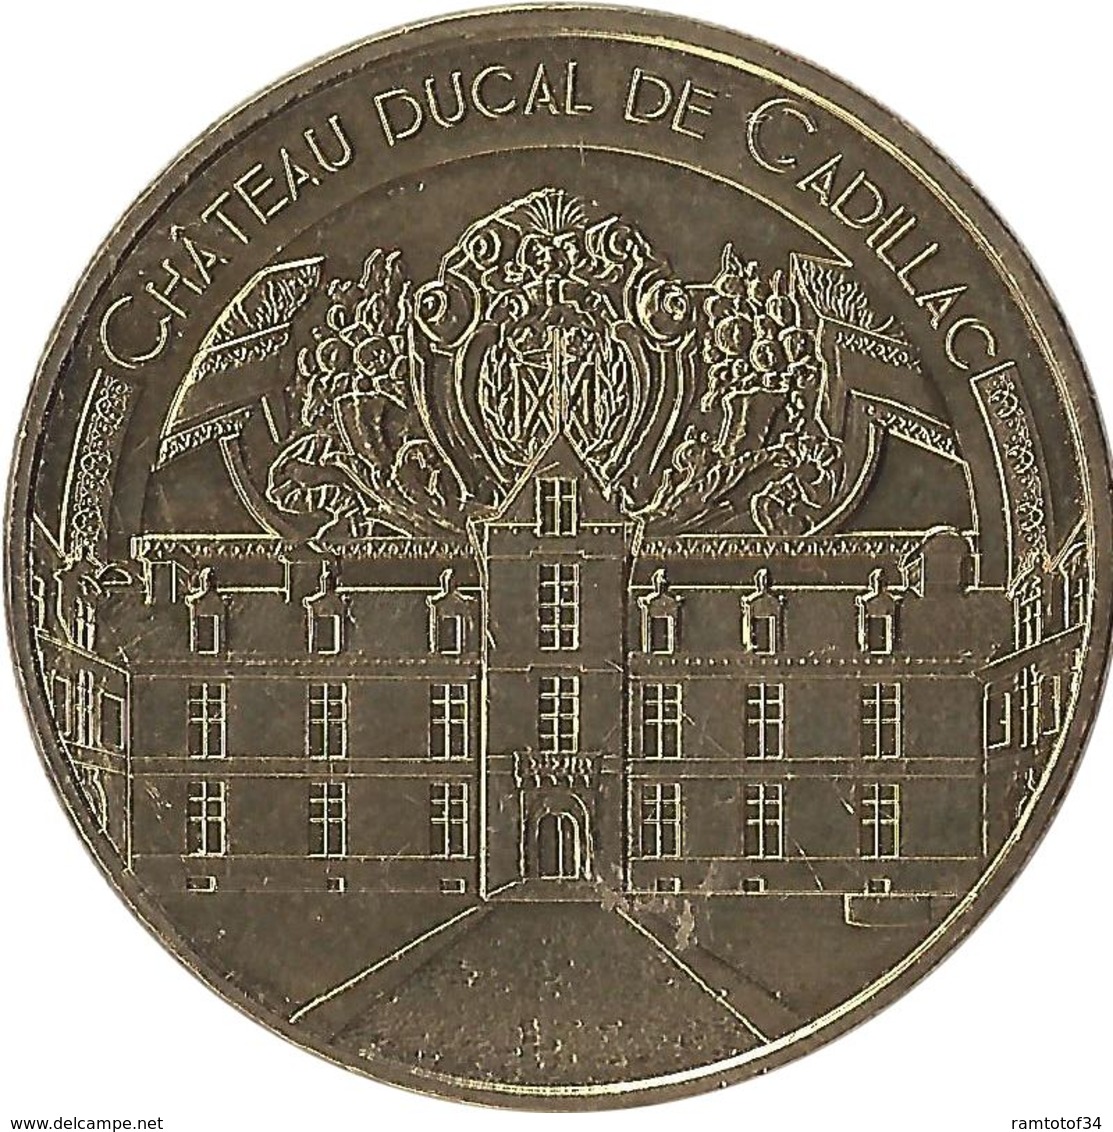 2019 MDP368 - CADILLAC - Château Ducal De Cadillac / MONNAIE DE PARIS - 2019